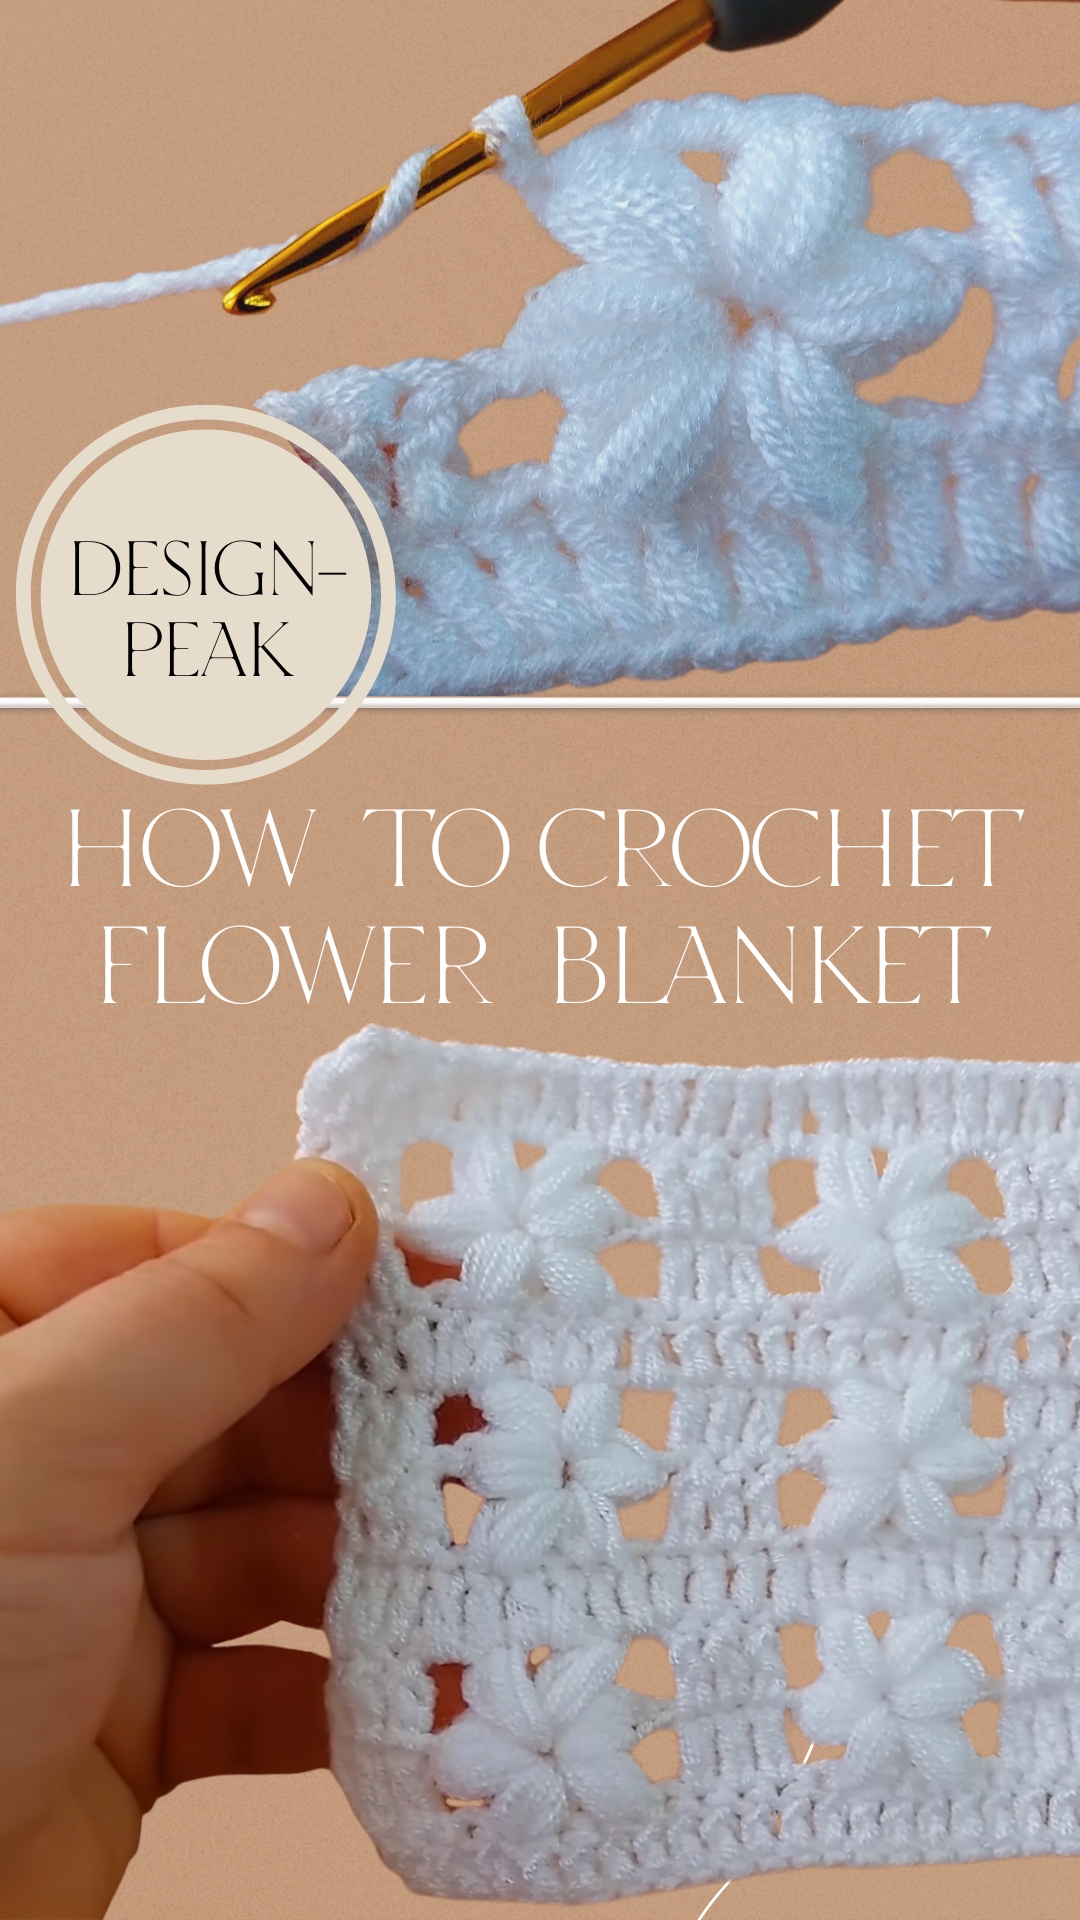 Crochet Flowers Into Blanket